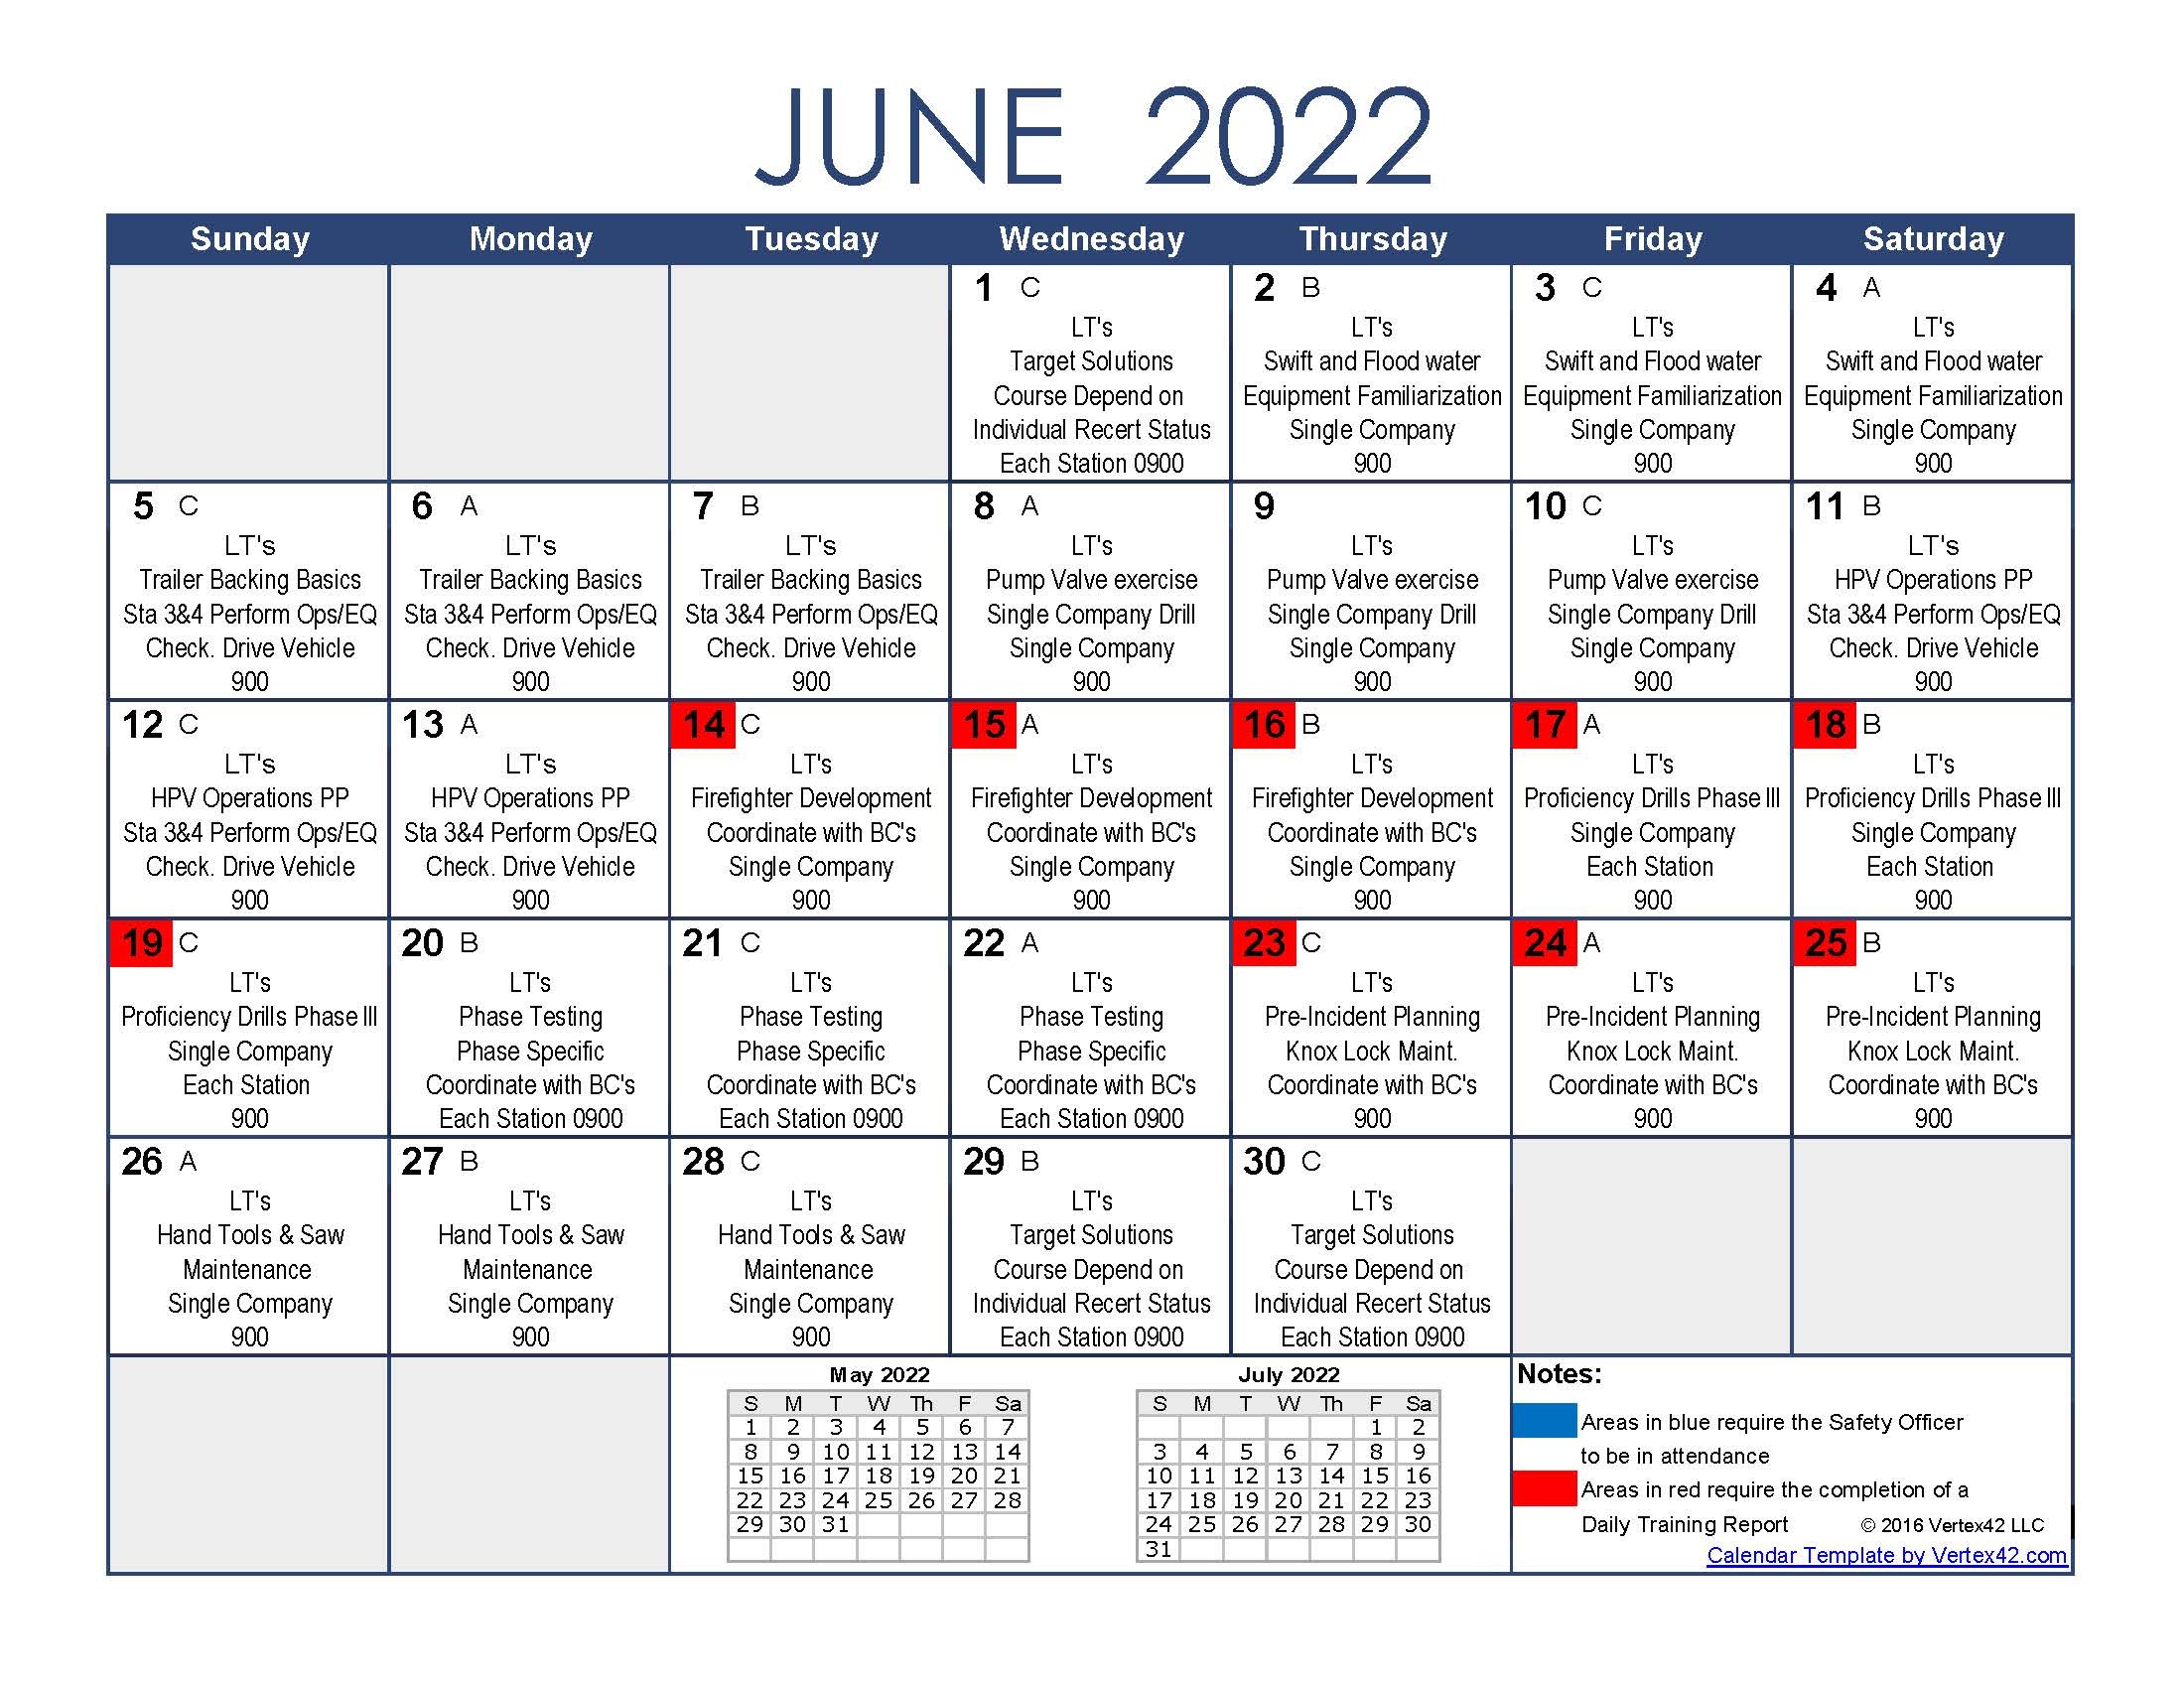 June Training Calendar (Revised)